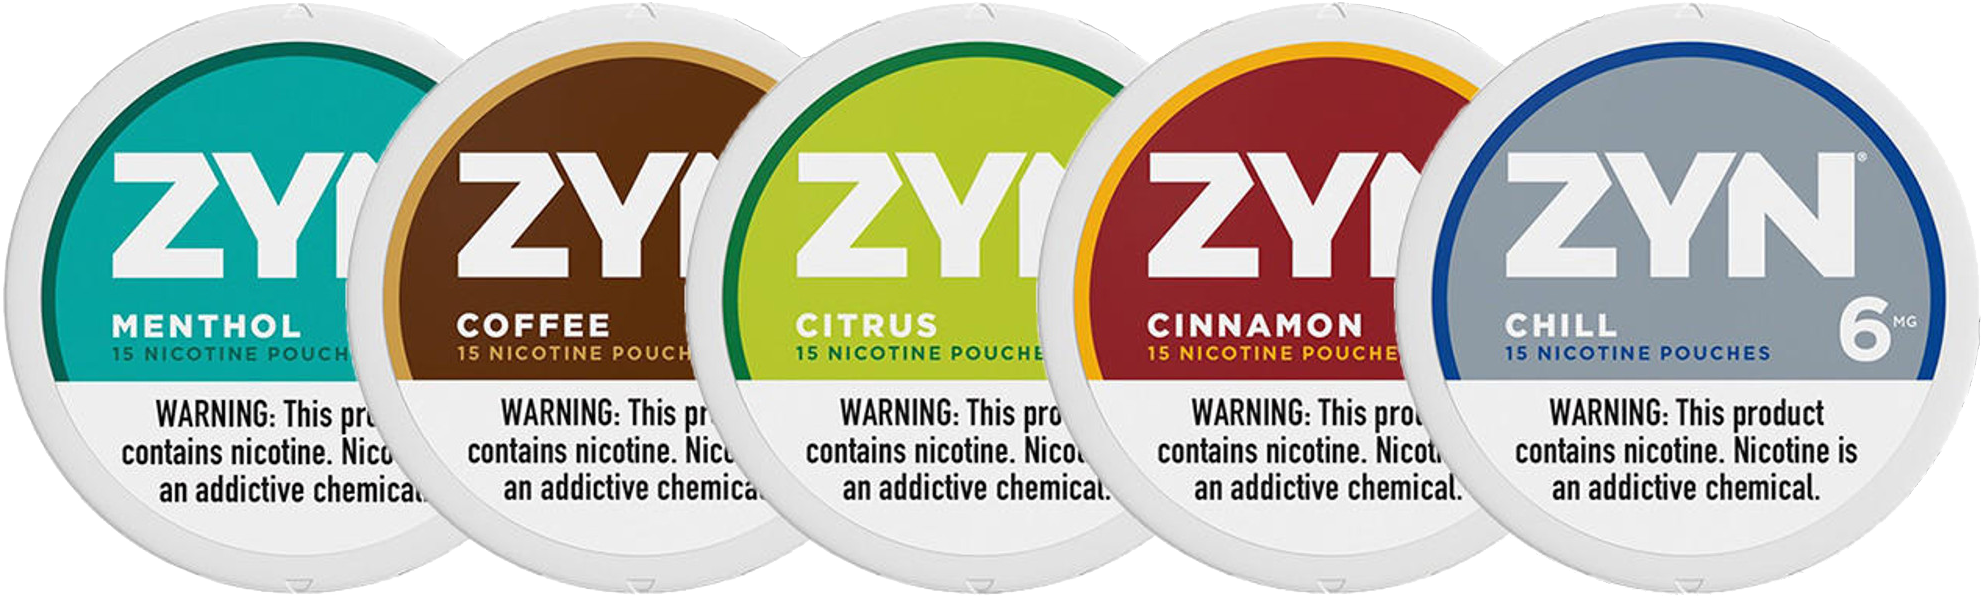 Zyn 6mg Menthol, Zyn 6mg Coffee, Zyn 6mg Citrus, Zyn 6mg Cinnamon, Zyn 6mg Chill